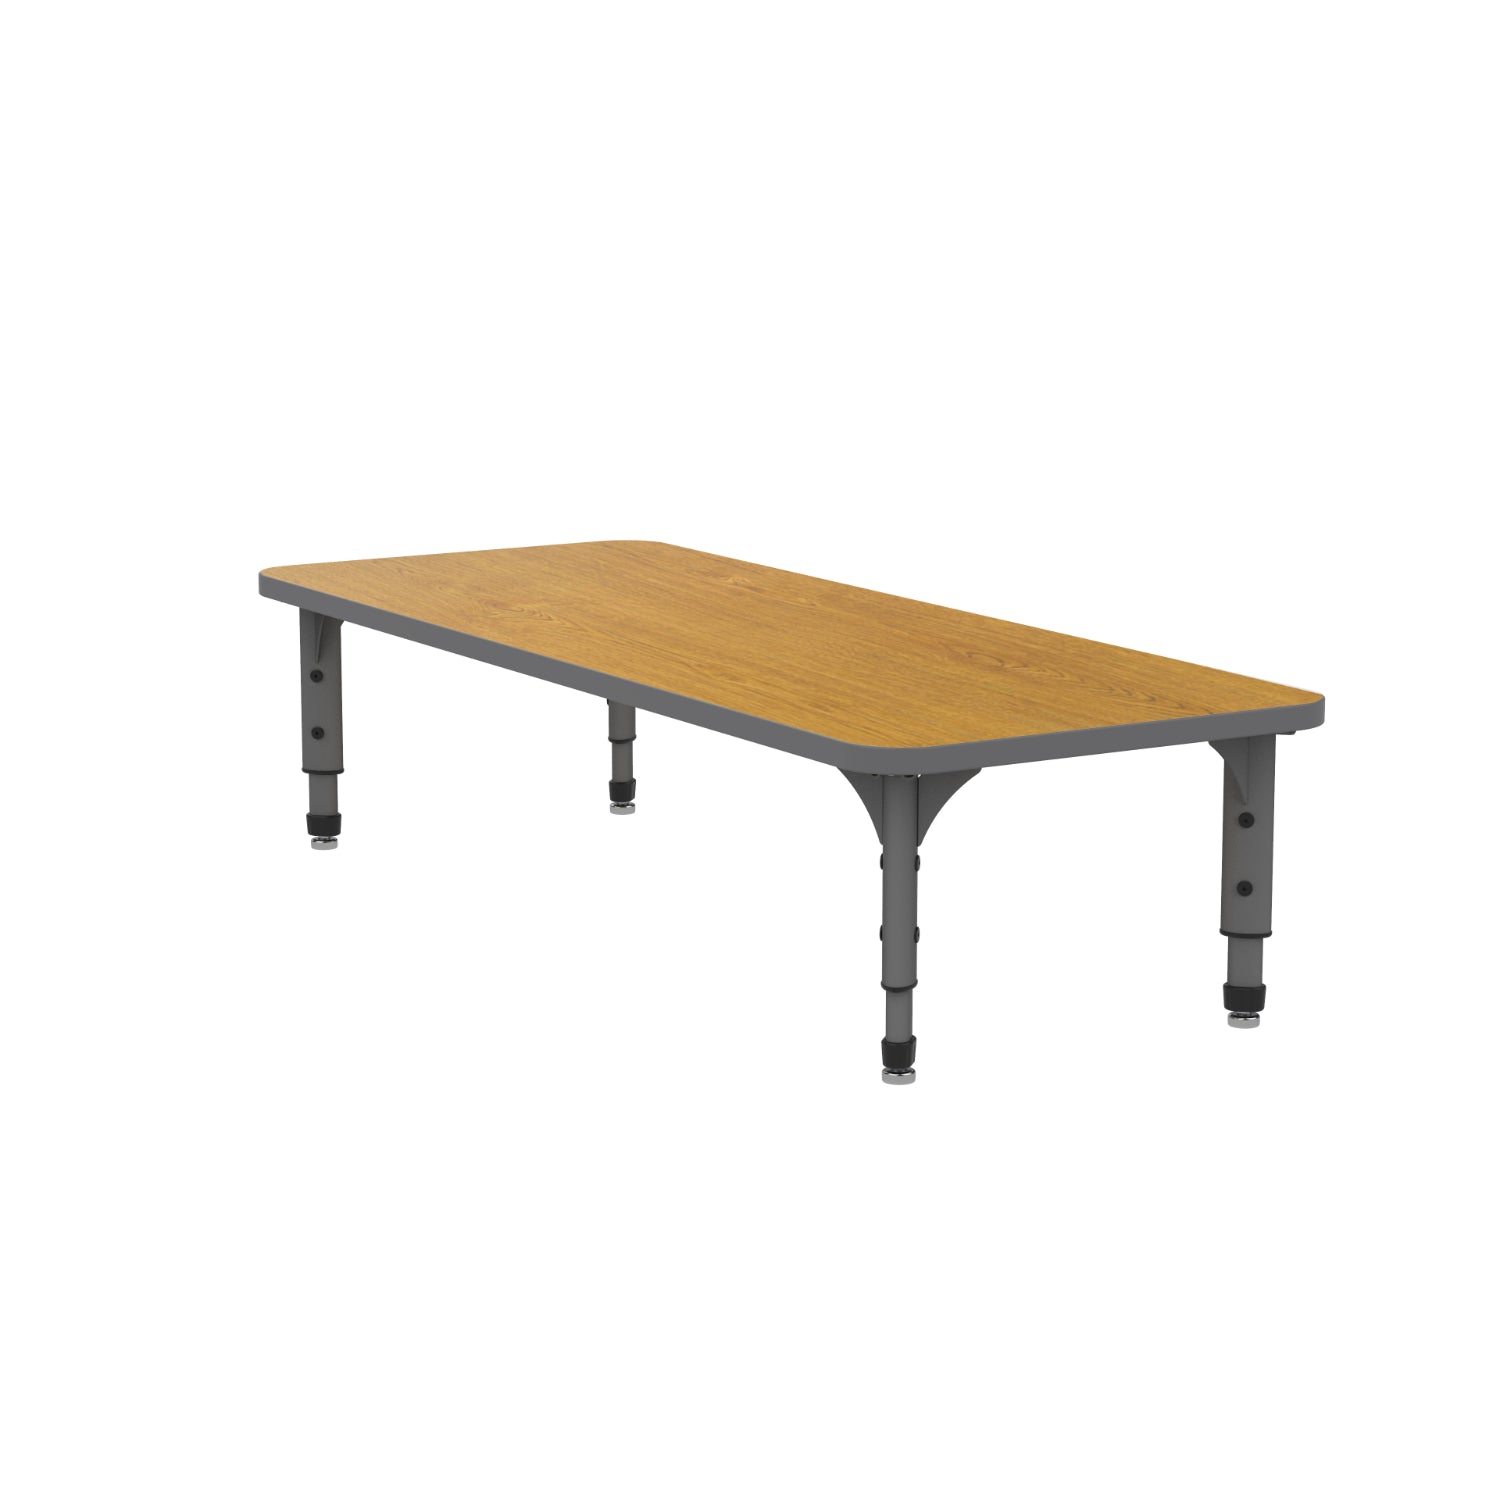 Adjustable Height Floor Activity Table, 24" x 60" Rectangle